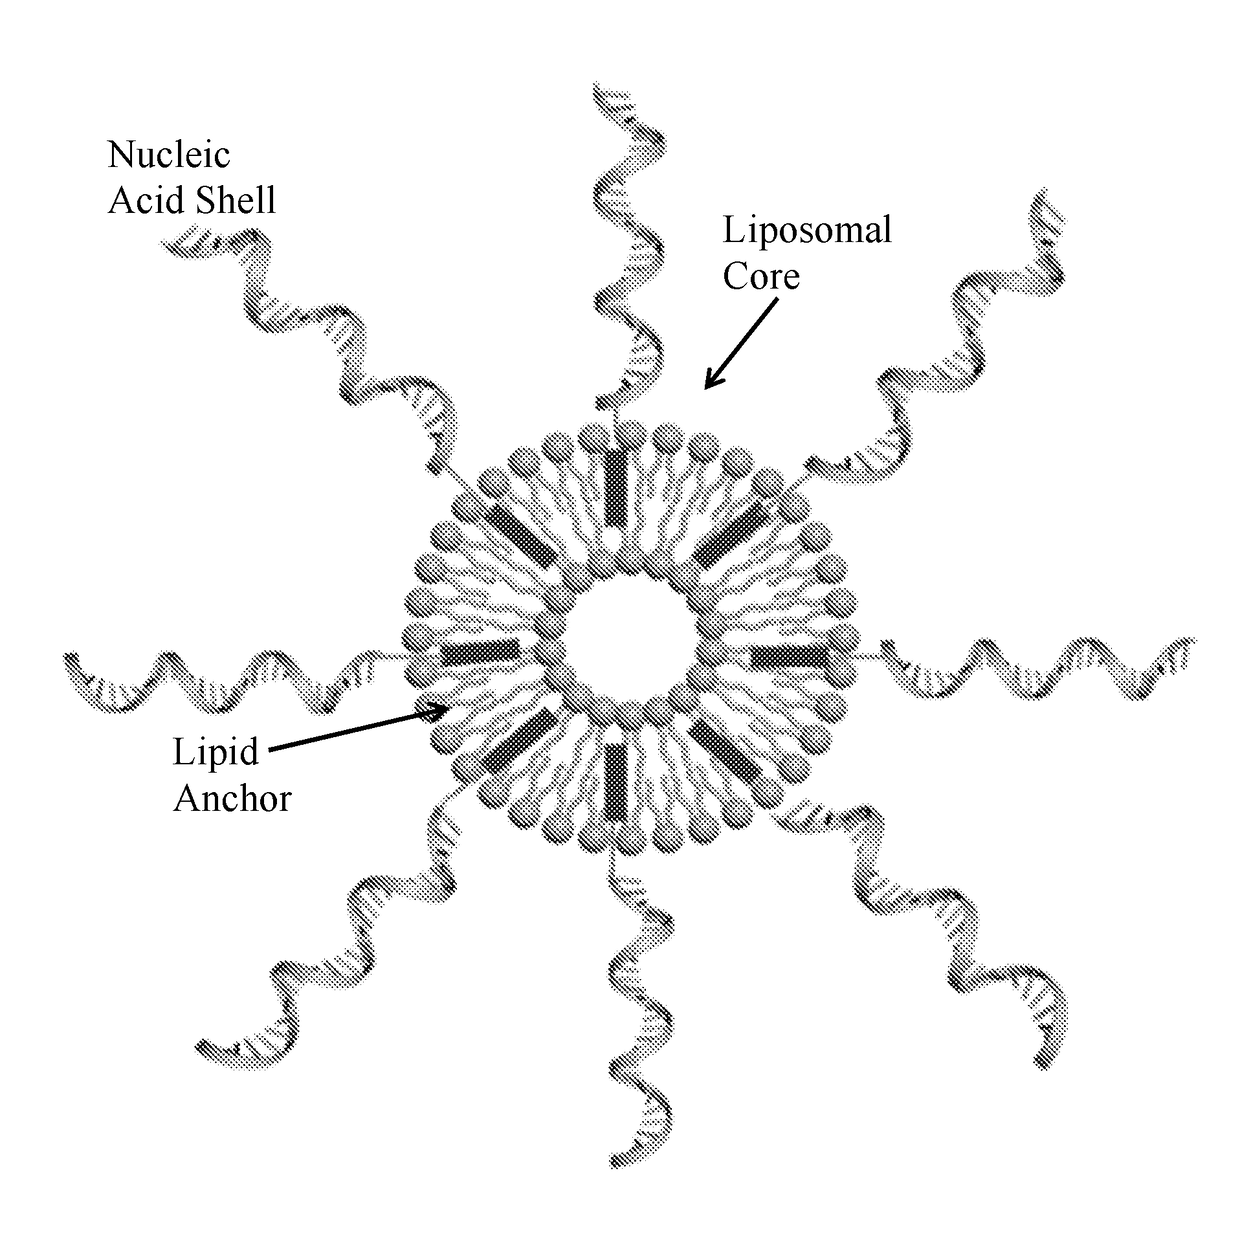 Immuno-regulatory lipid containing spherical nucleic acids